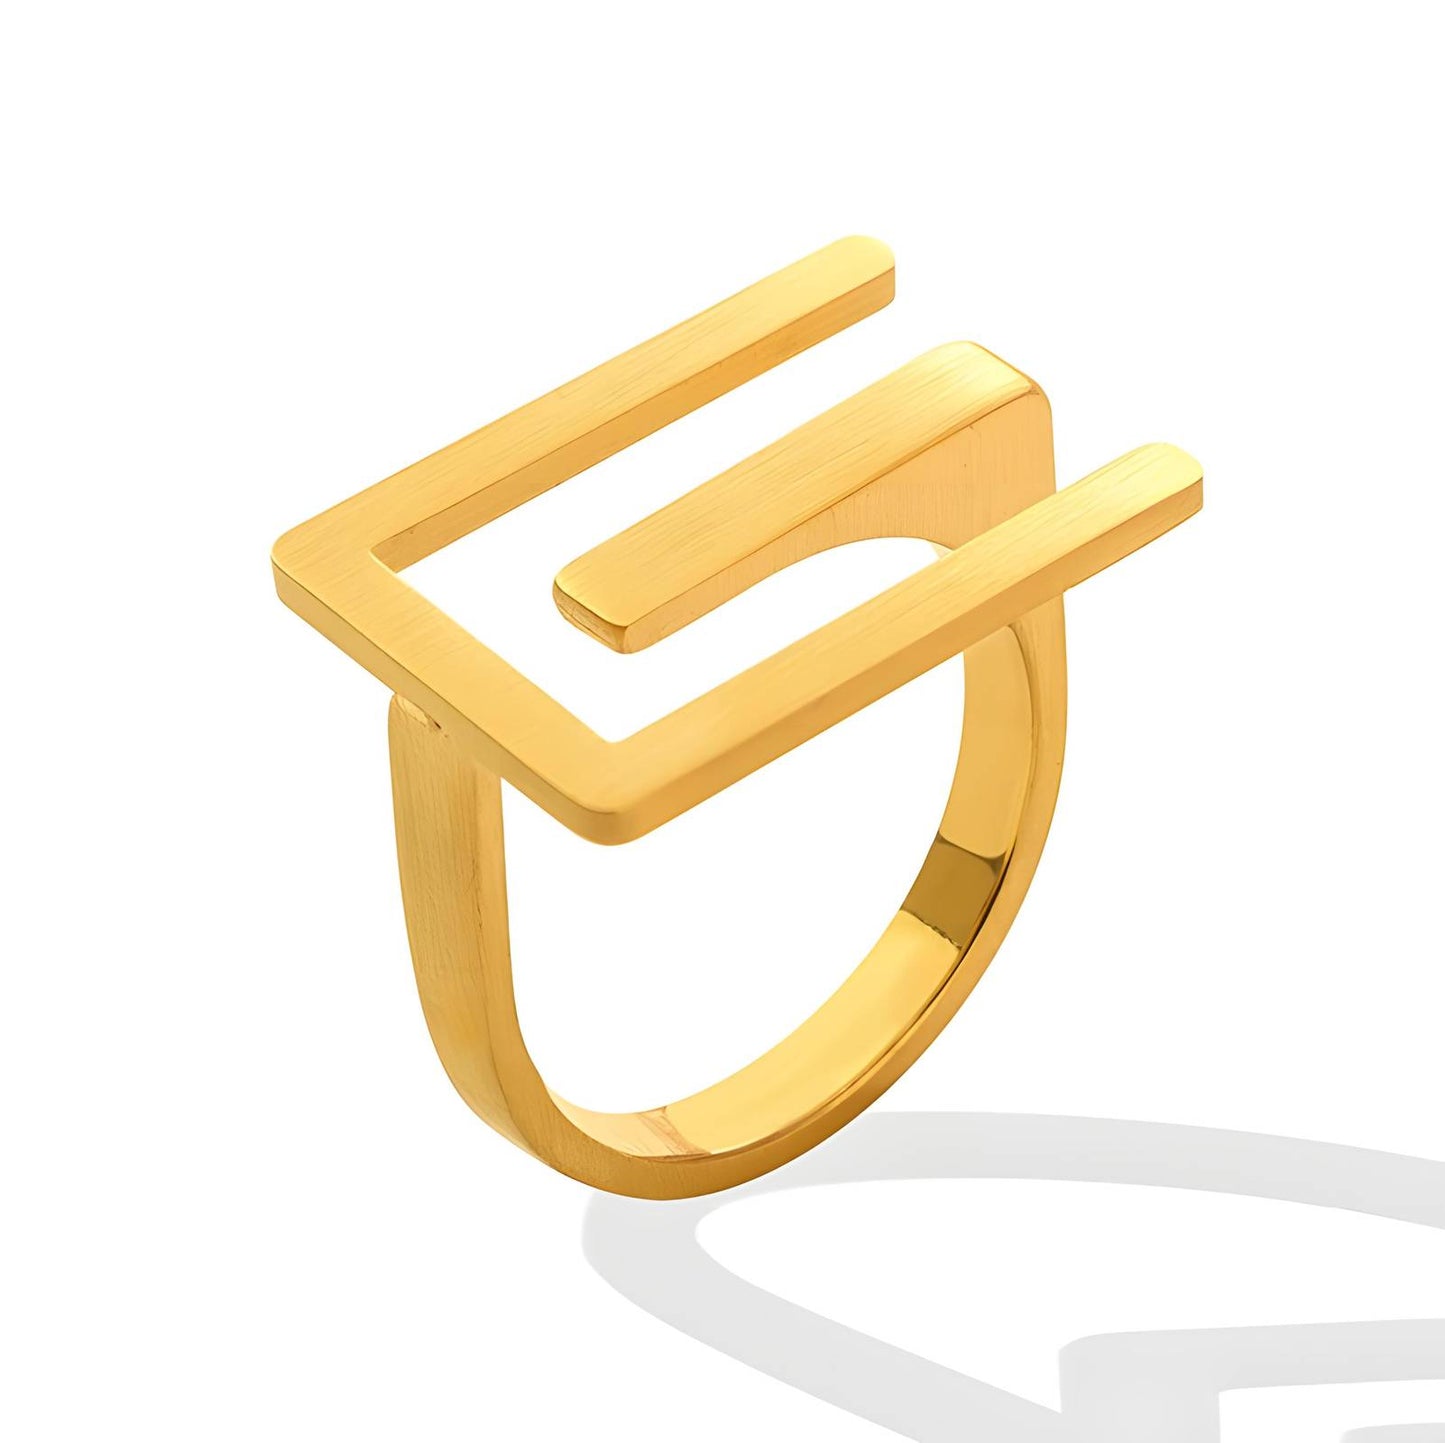 18K gold plated Stainless steel finger ring